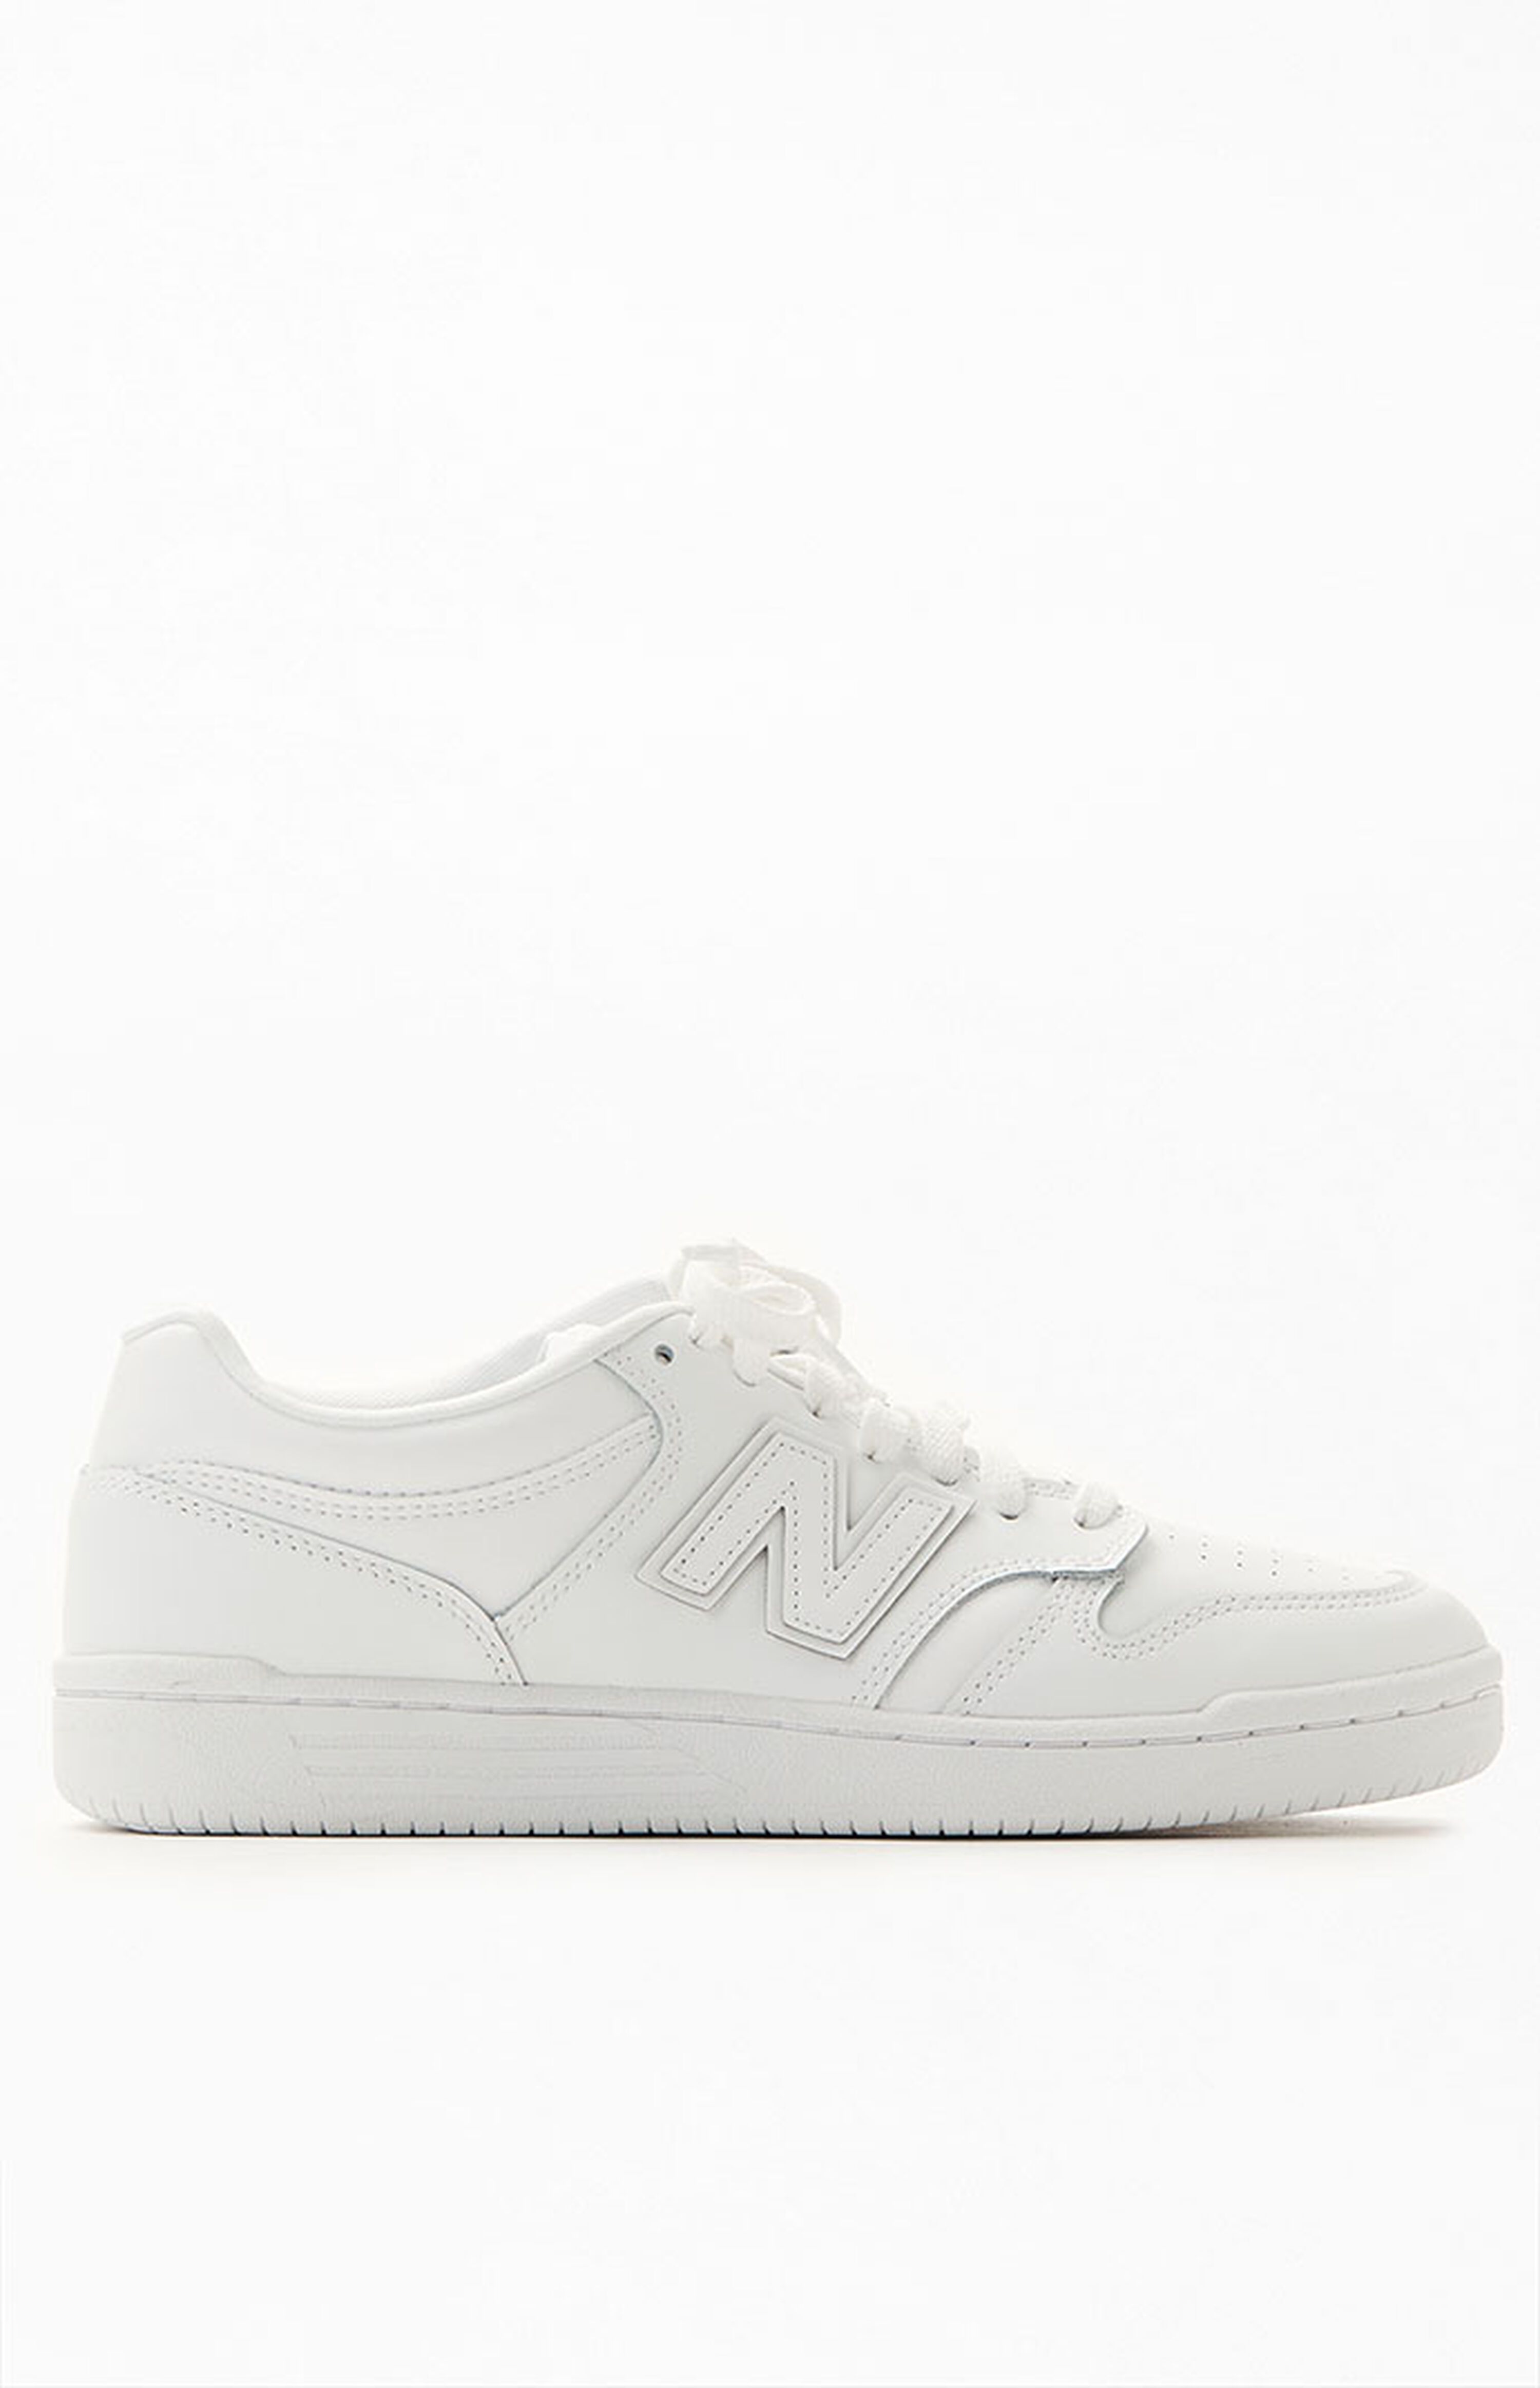 New Balance White BB480 Shoes | PacSun